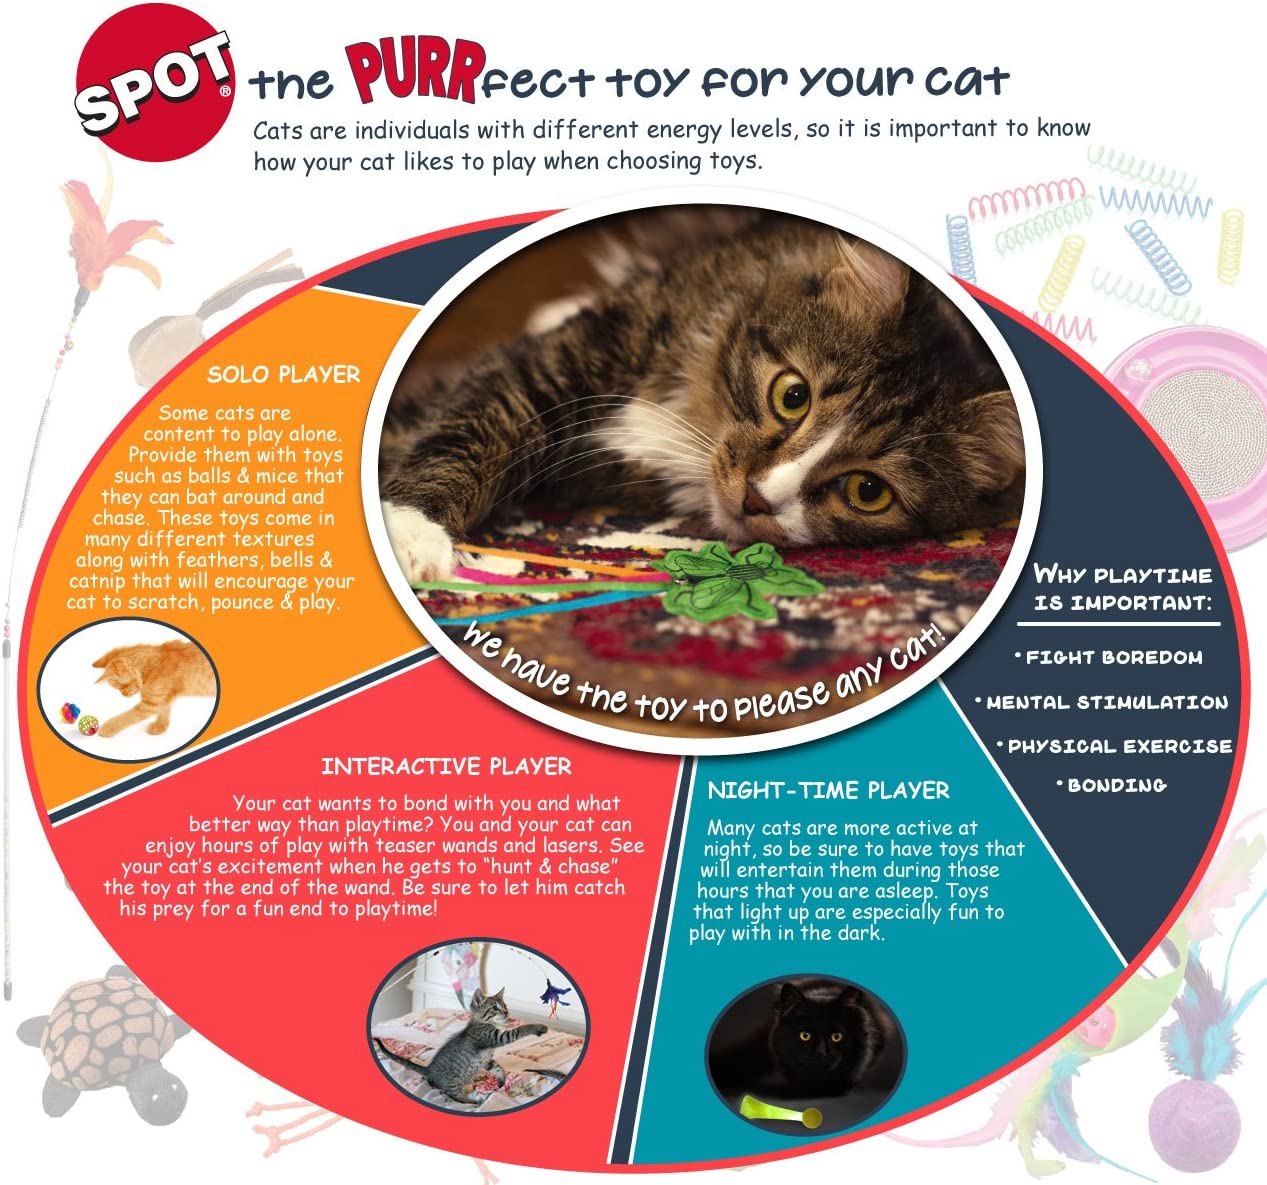 Canine's World Catnip Toys Spot Spotnips Rattle with Catnip Animal Print, 2 Pack Spot